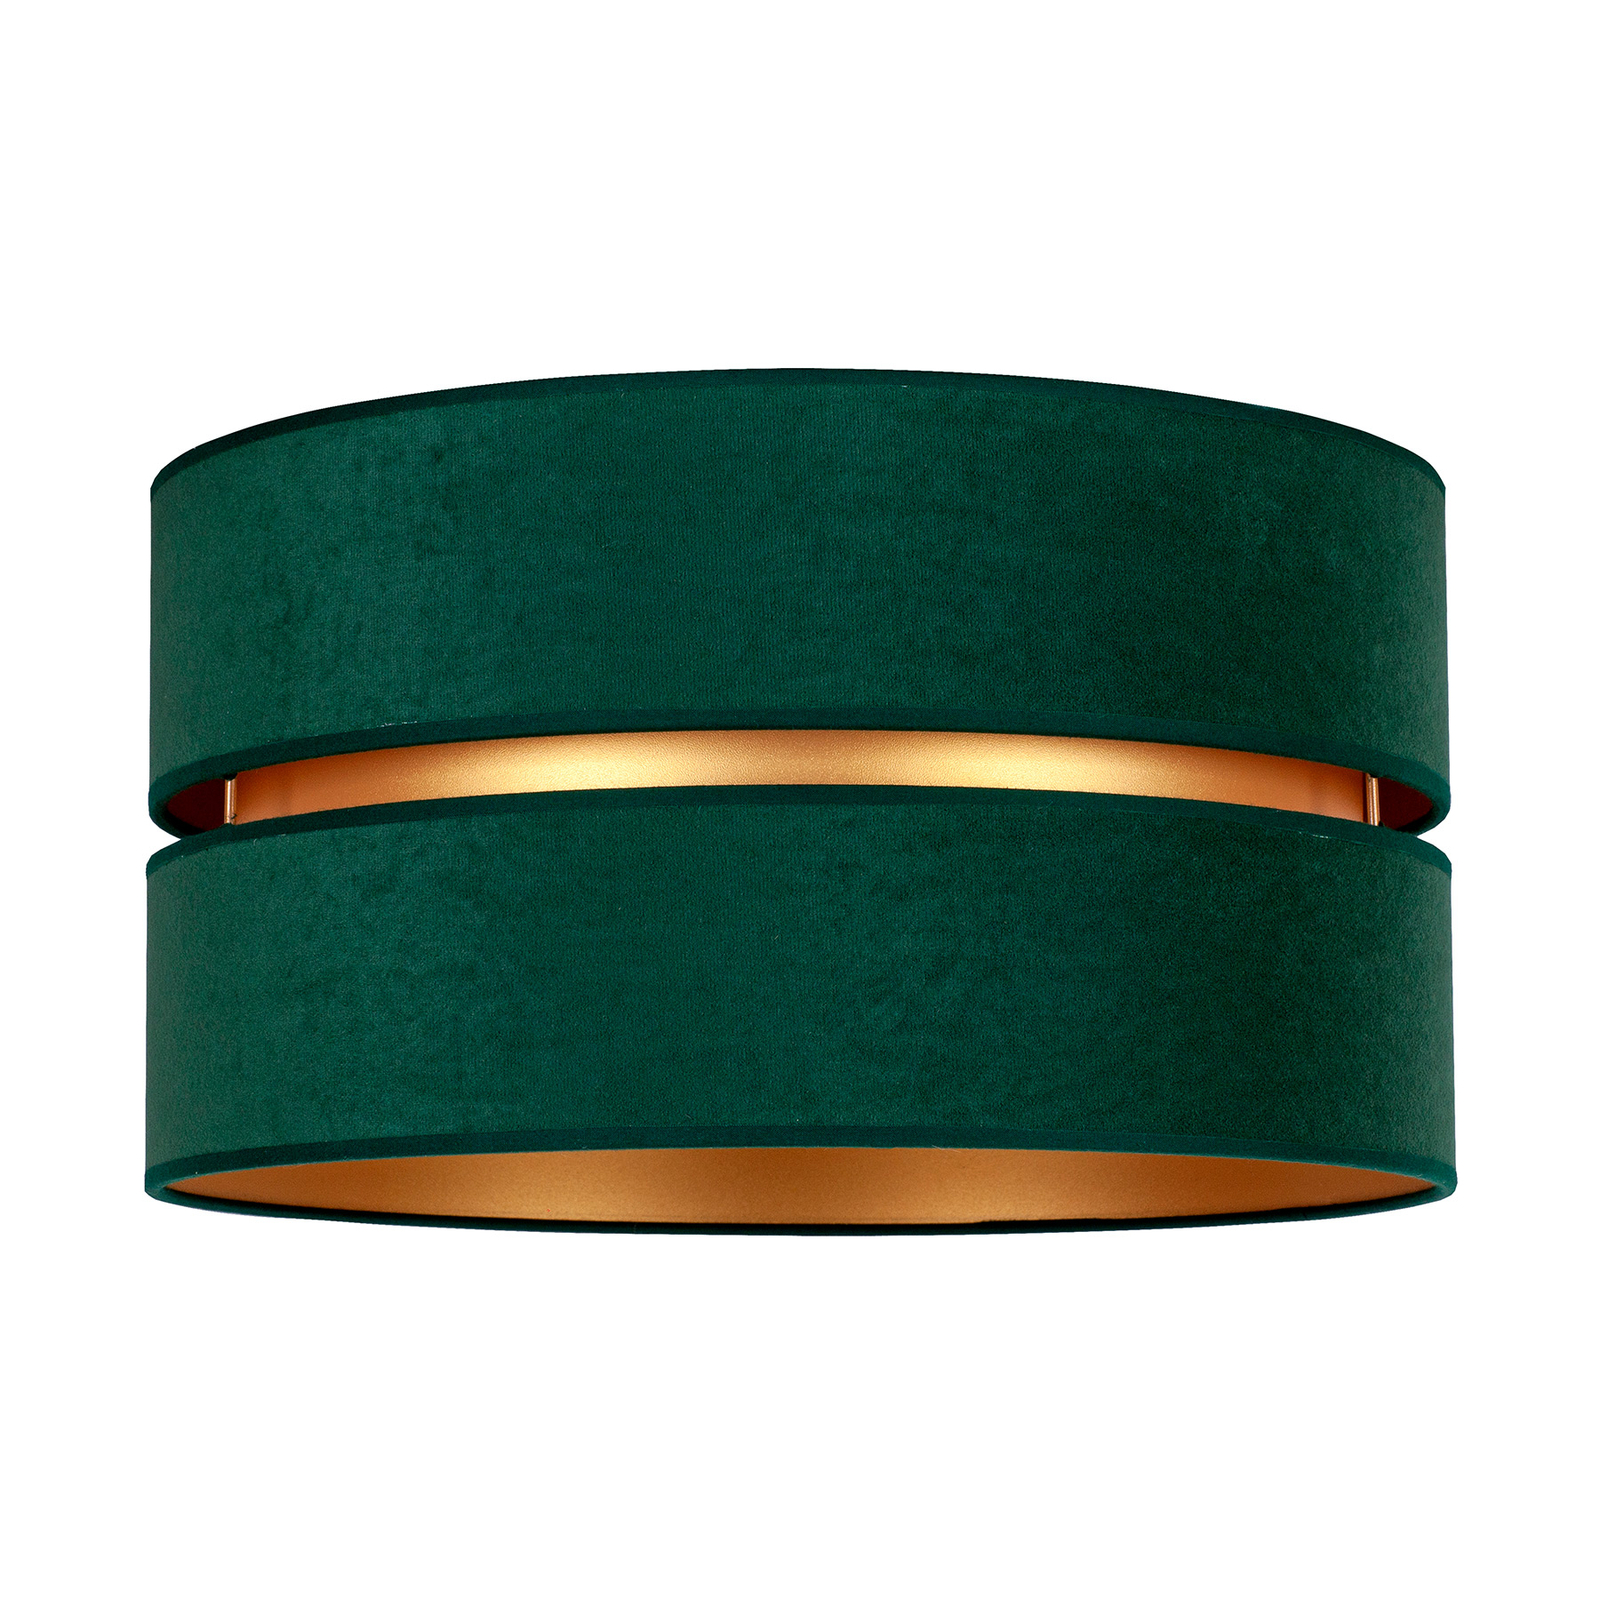 Duo lámpa, zöld/arany, Ø 60 cm, egy izzós